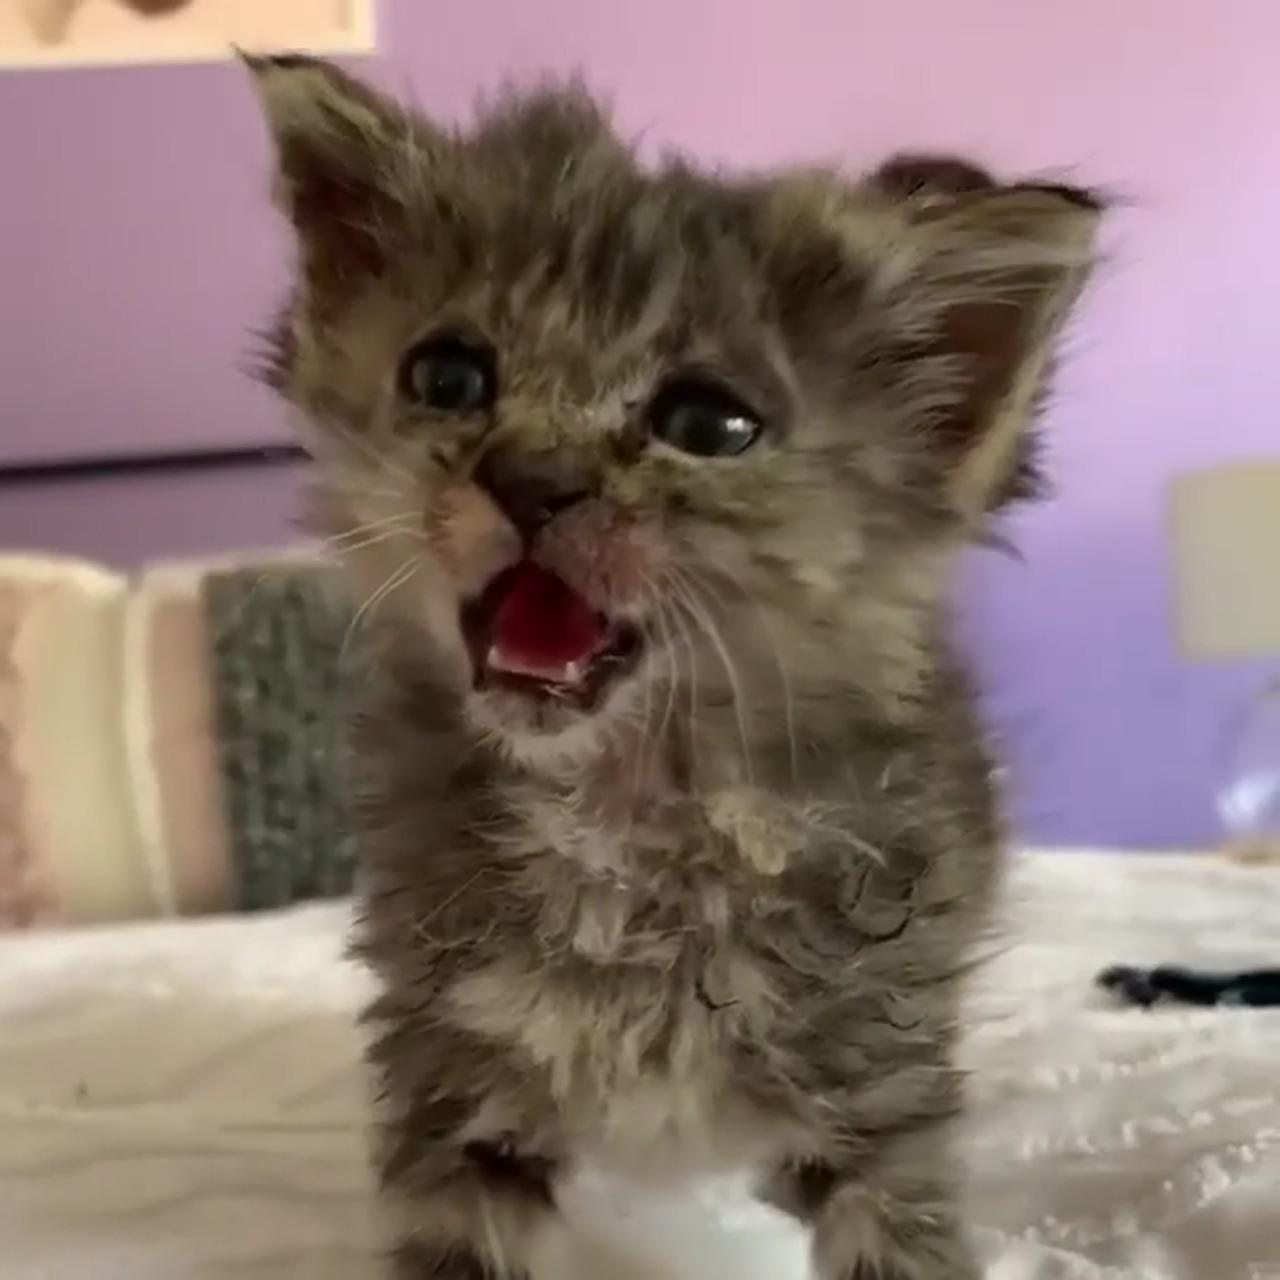 Hooman, hear me roarrr so fierce ; cute newborn cats